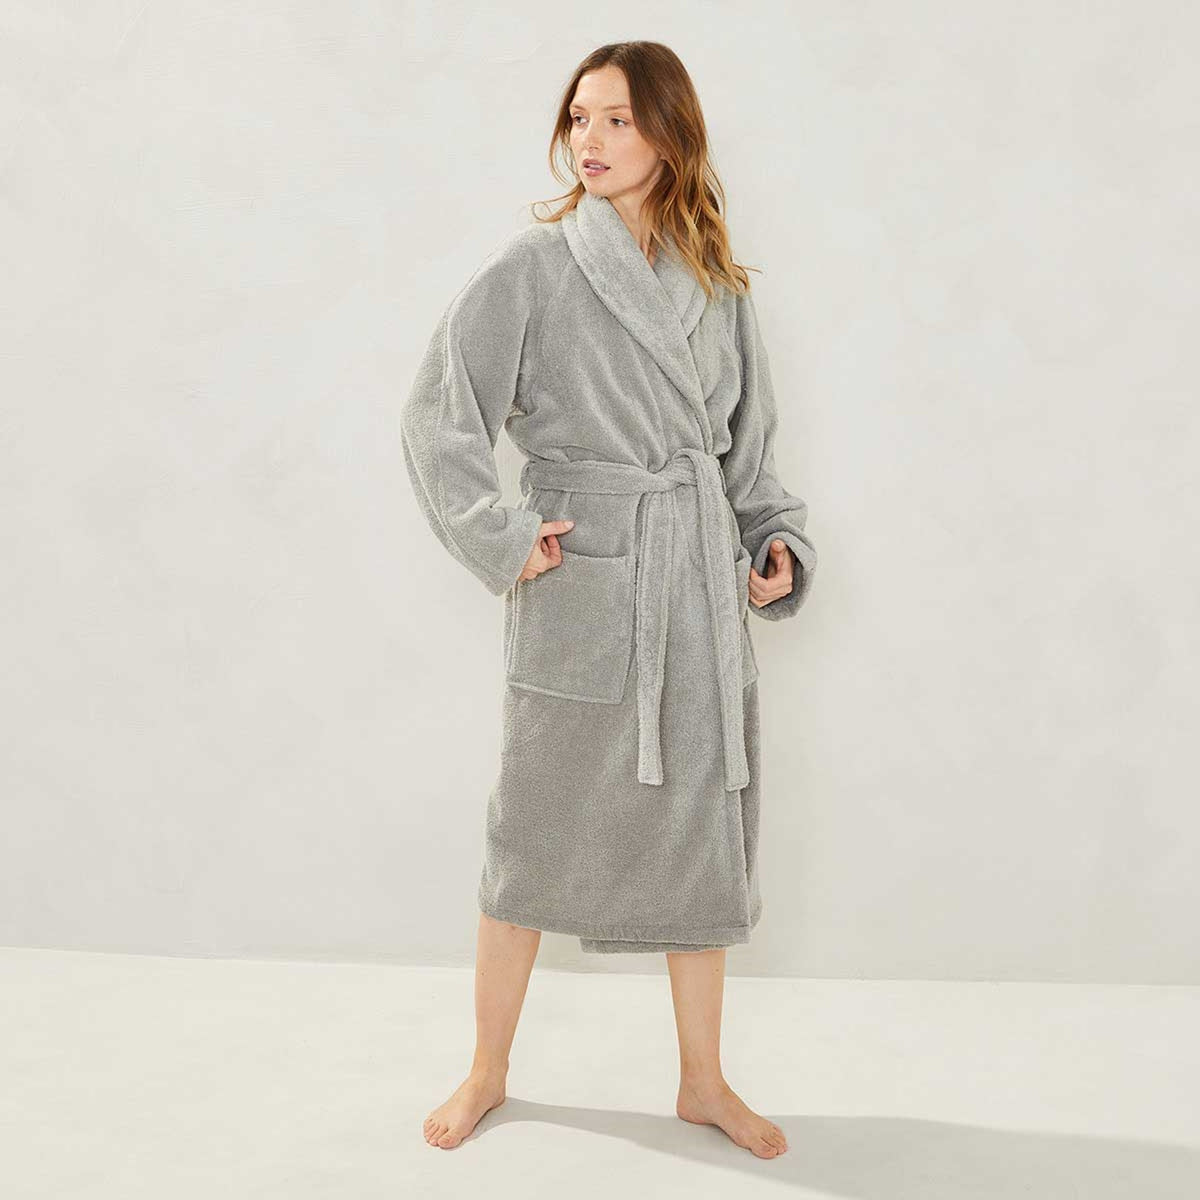 Model Wearing Yves Delorme Etoile Bath Robe in Platine Color